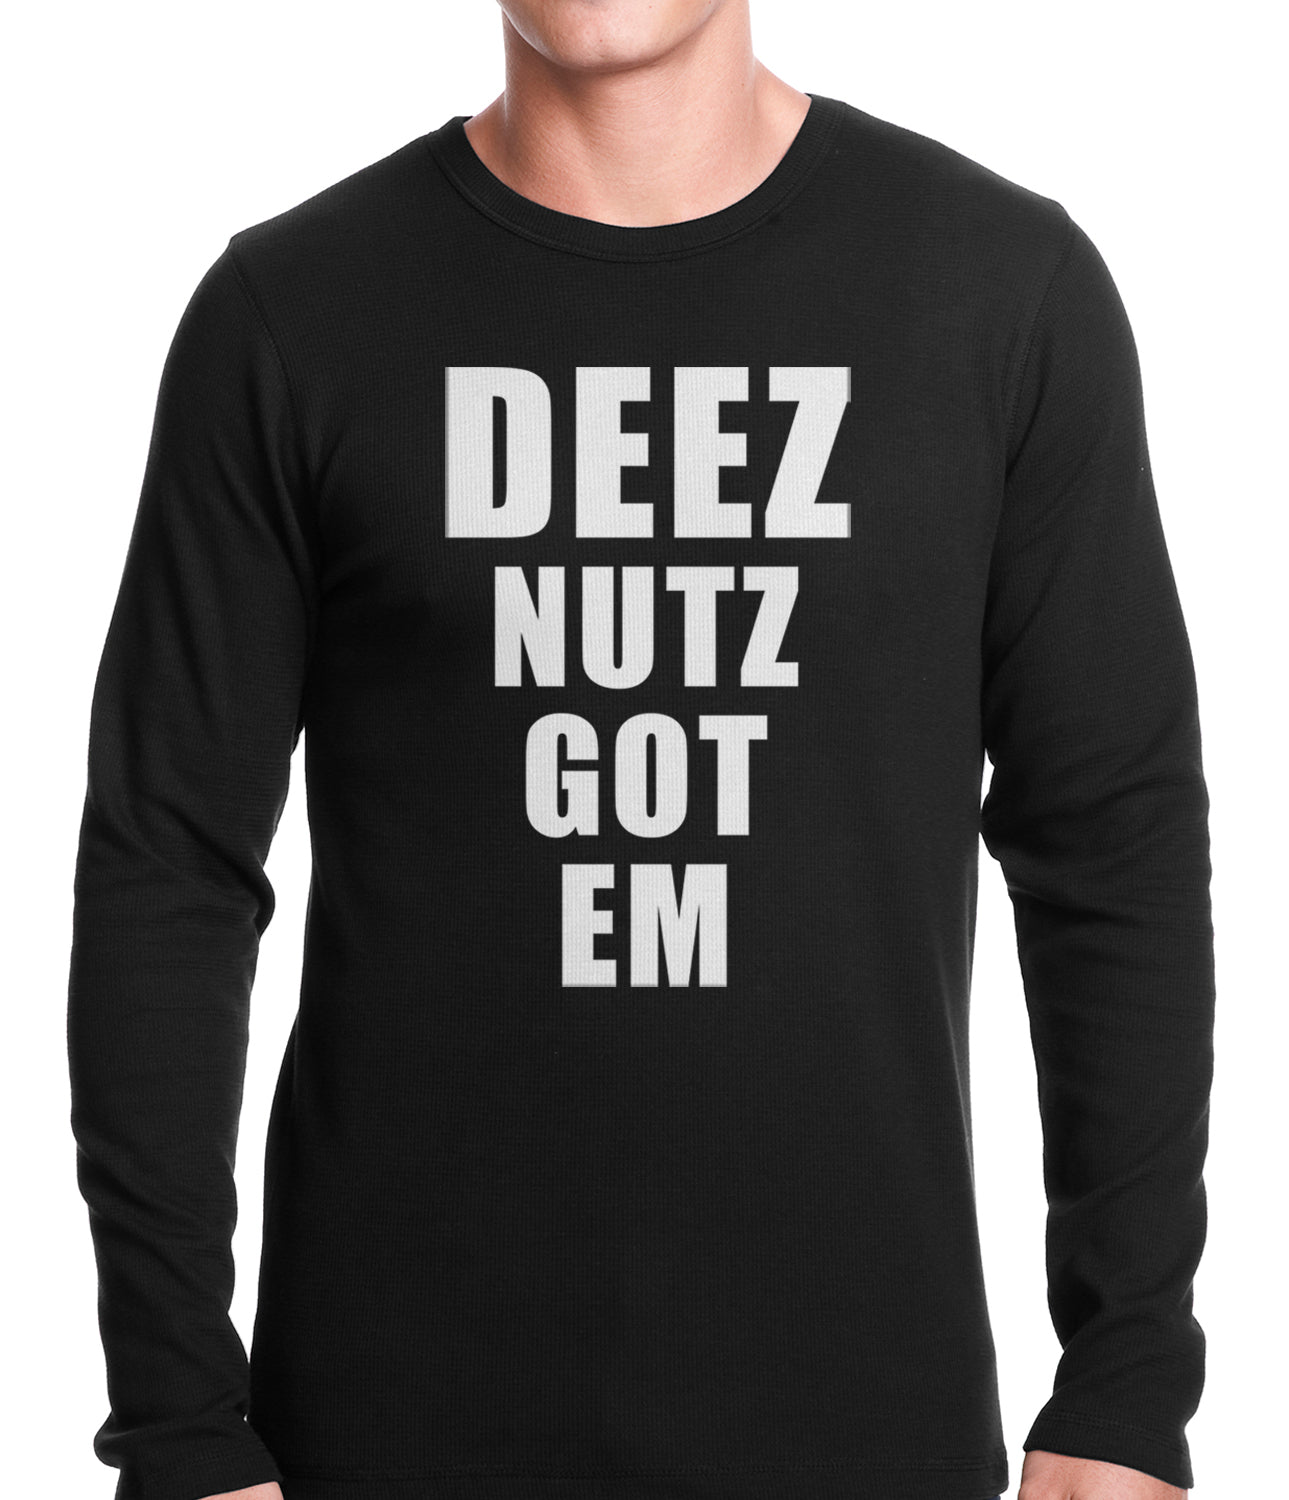 Deez Nutz Got Em Thermal Shirt